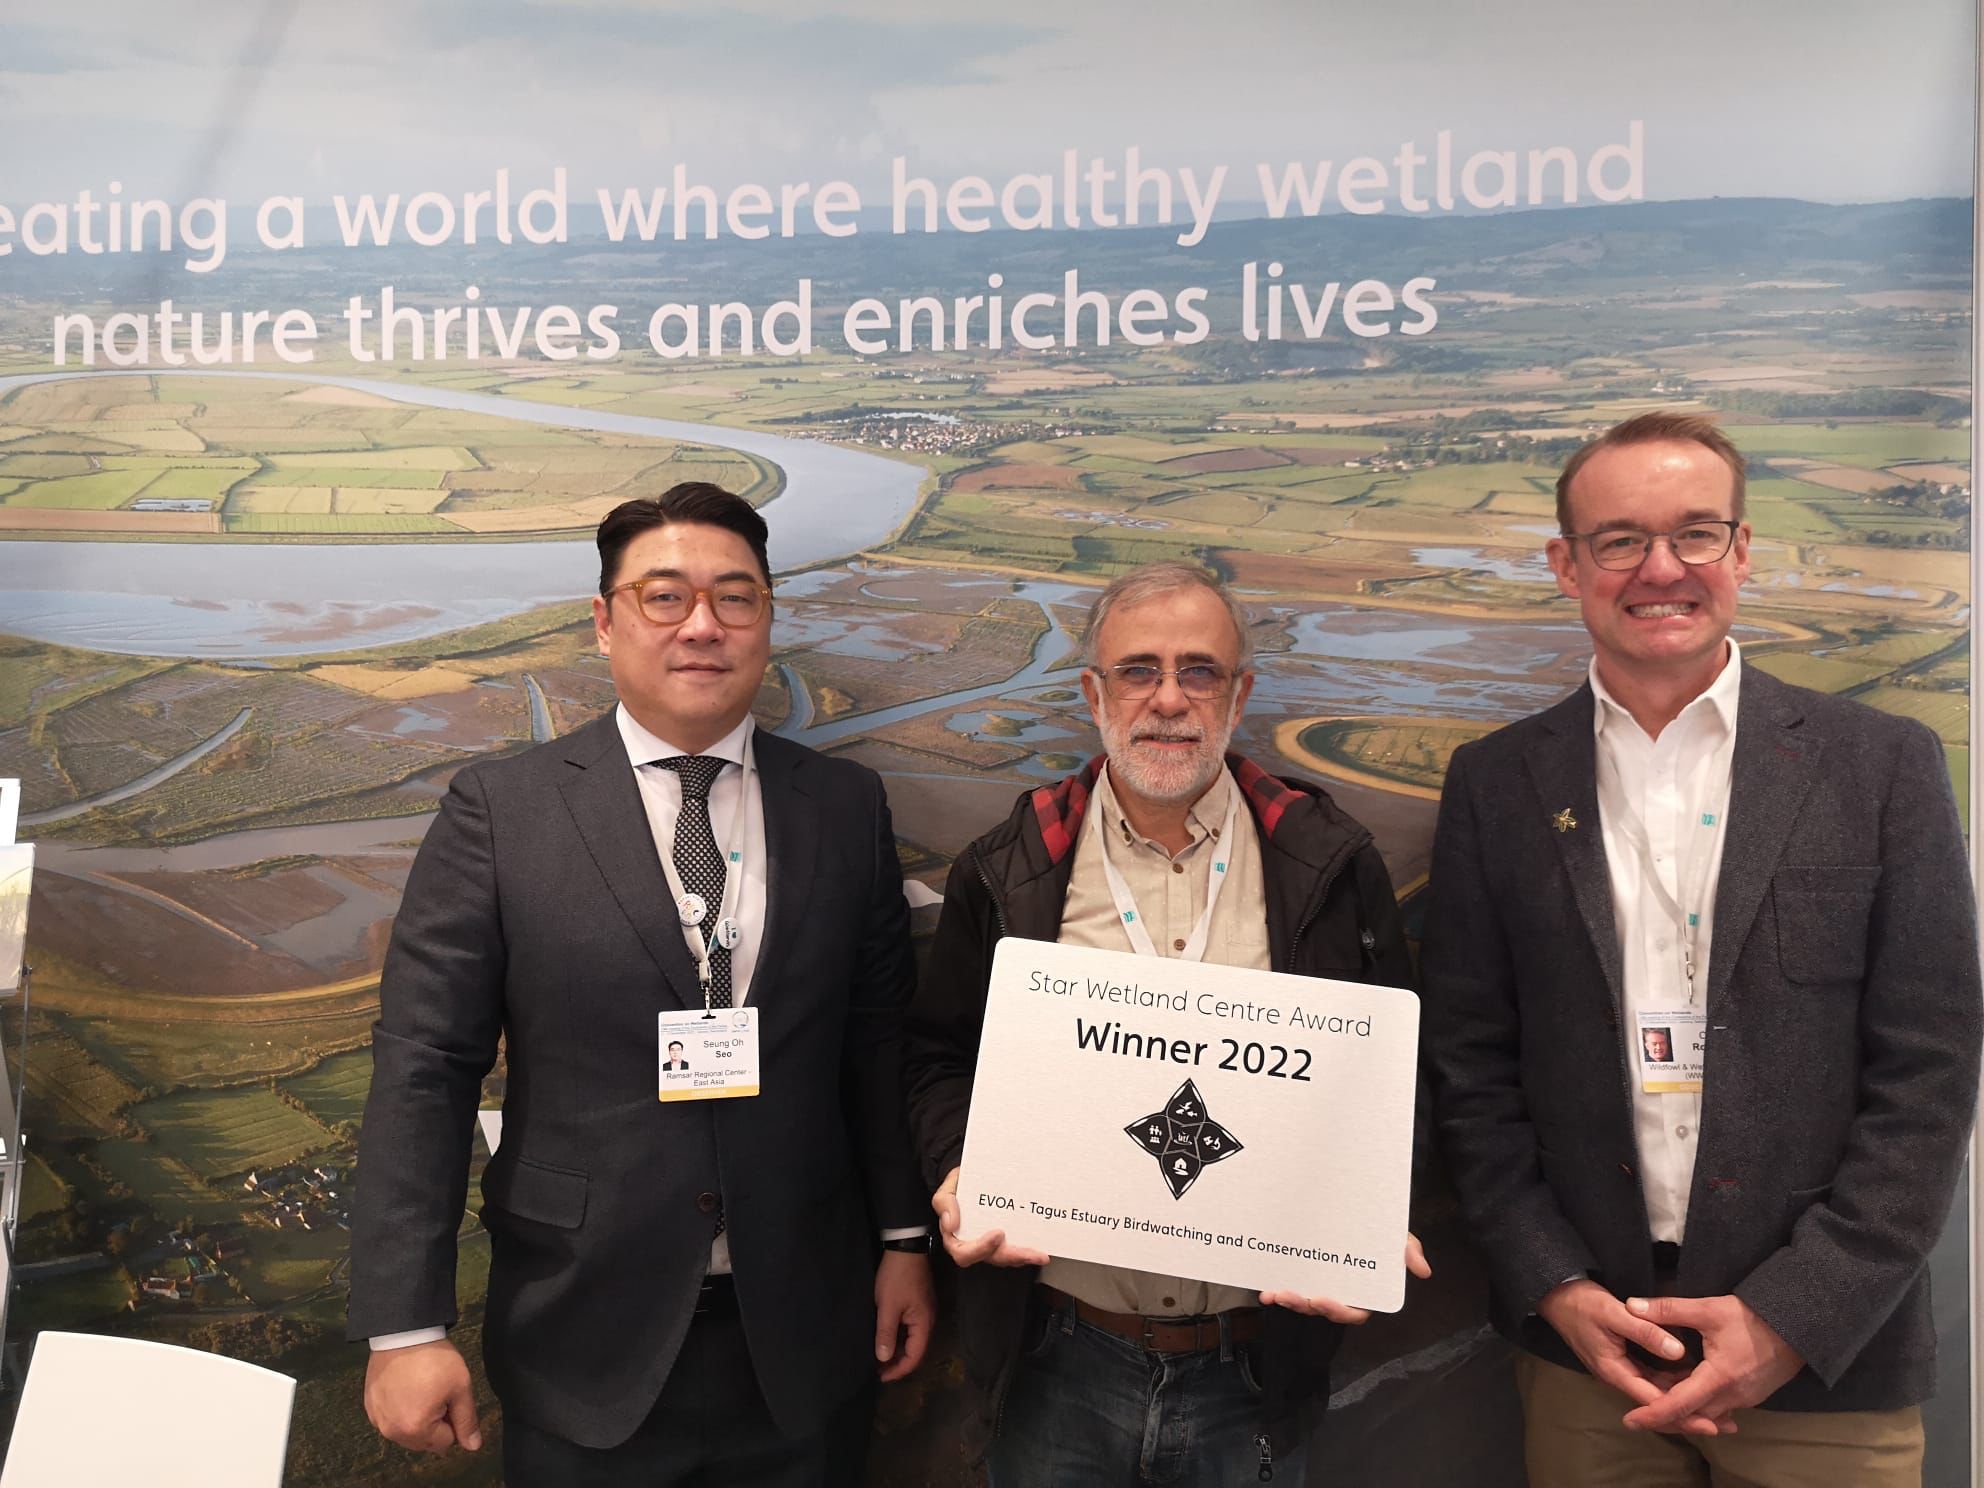 EVOA galardoado com Star Wetland Award na COP14 Ramsar